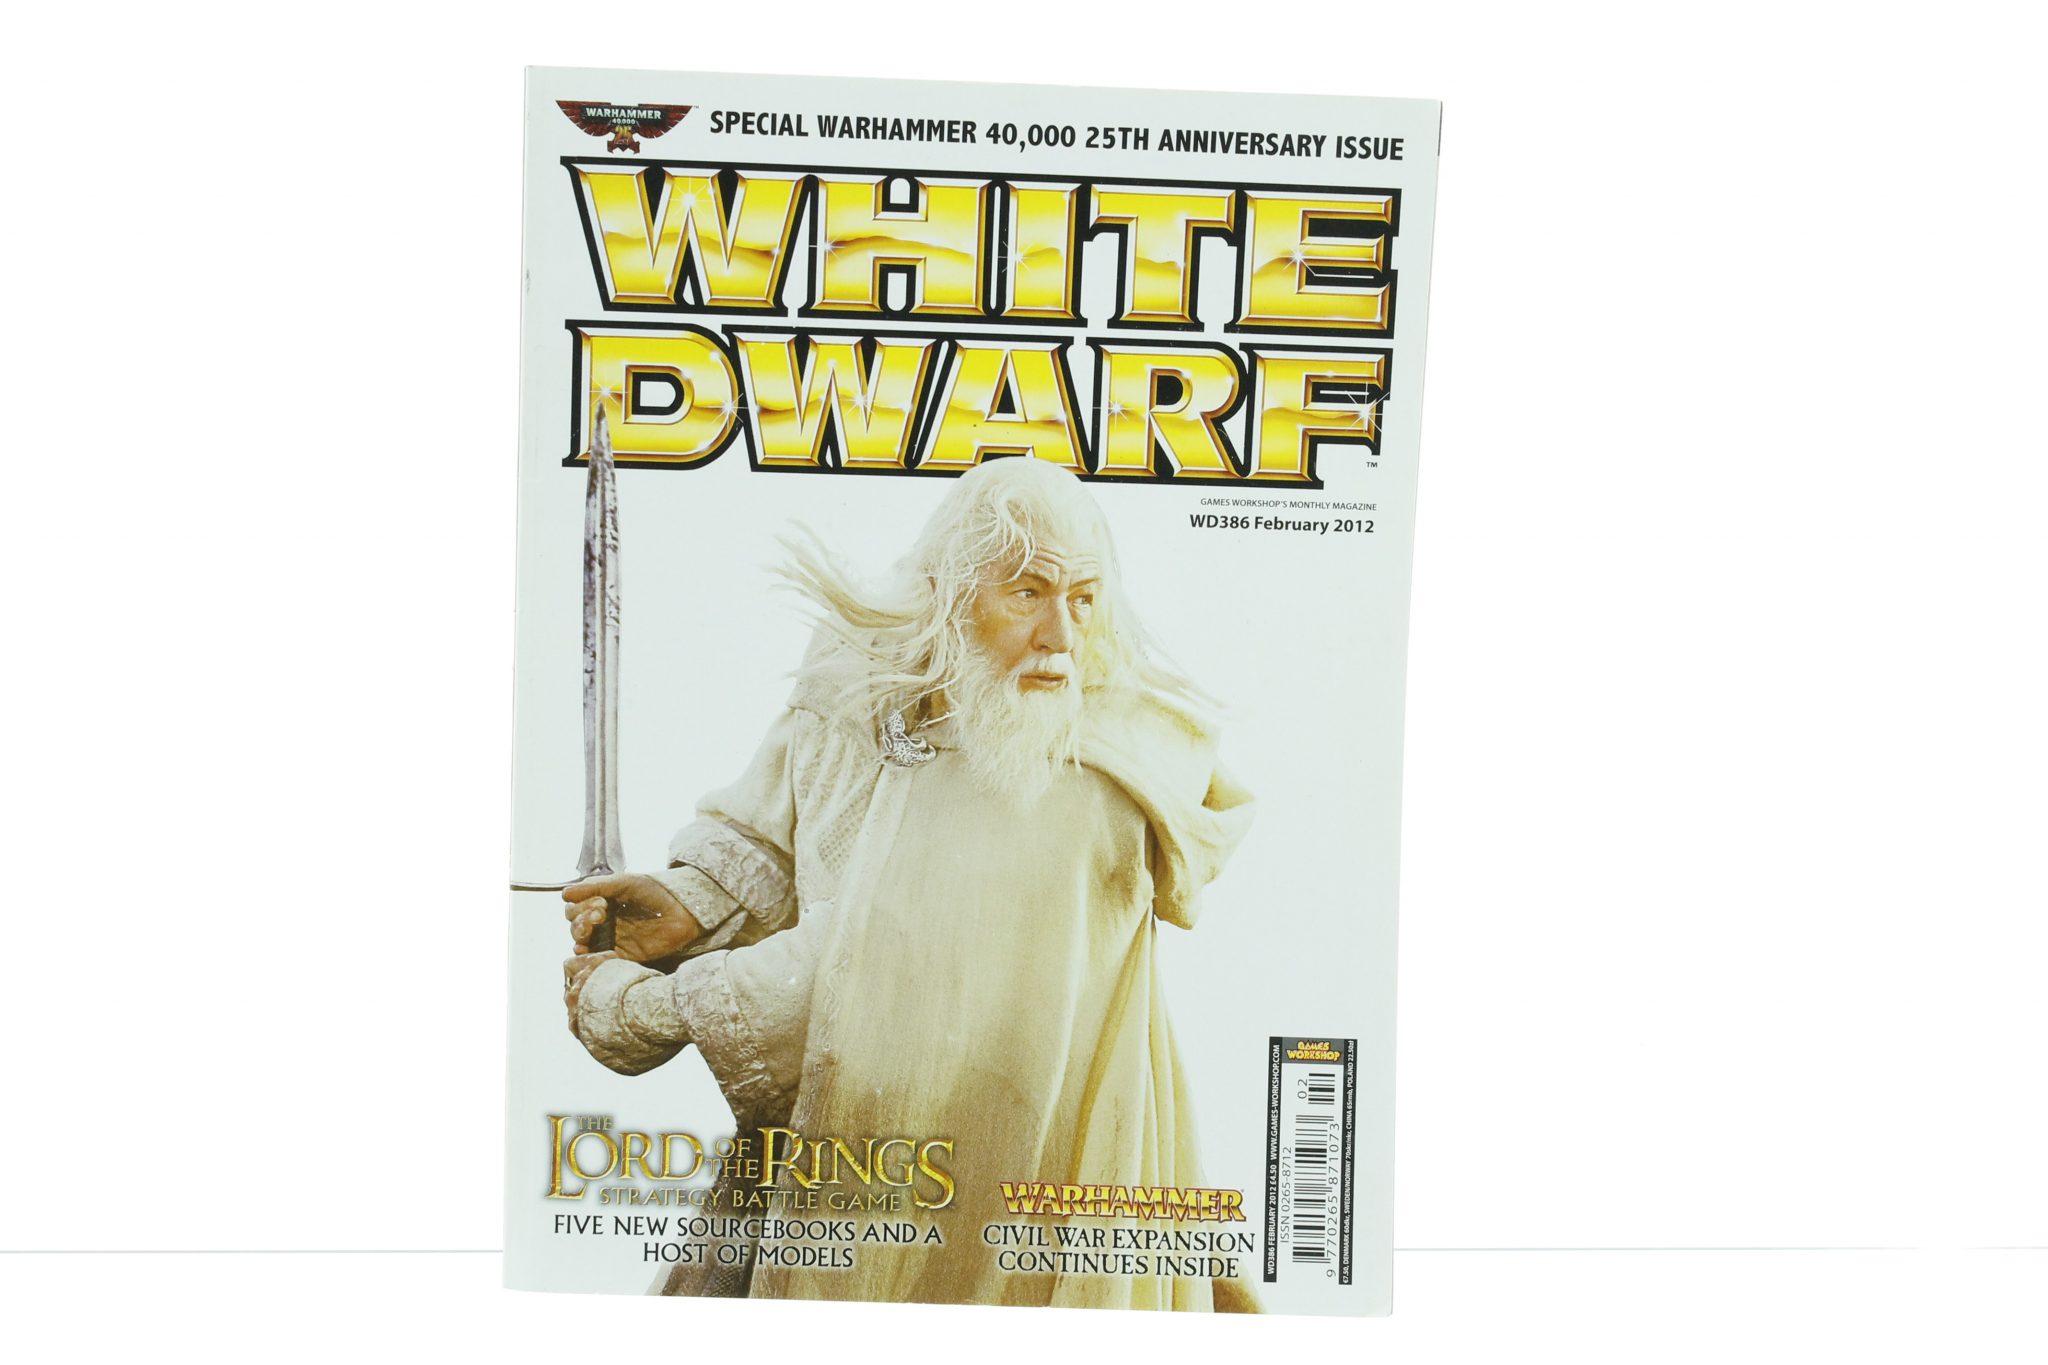 white dwarf magazine issue 1 pdf